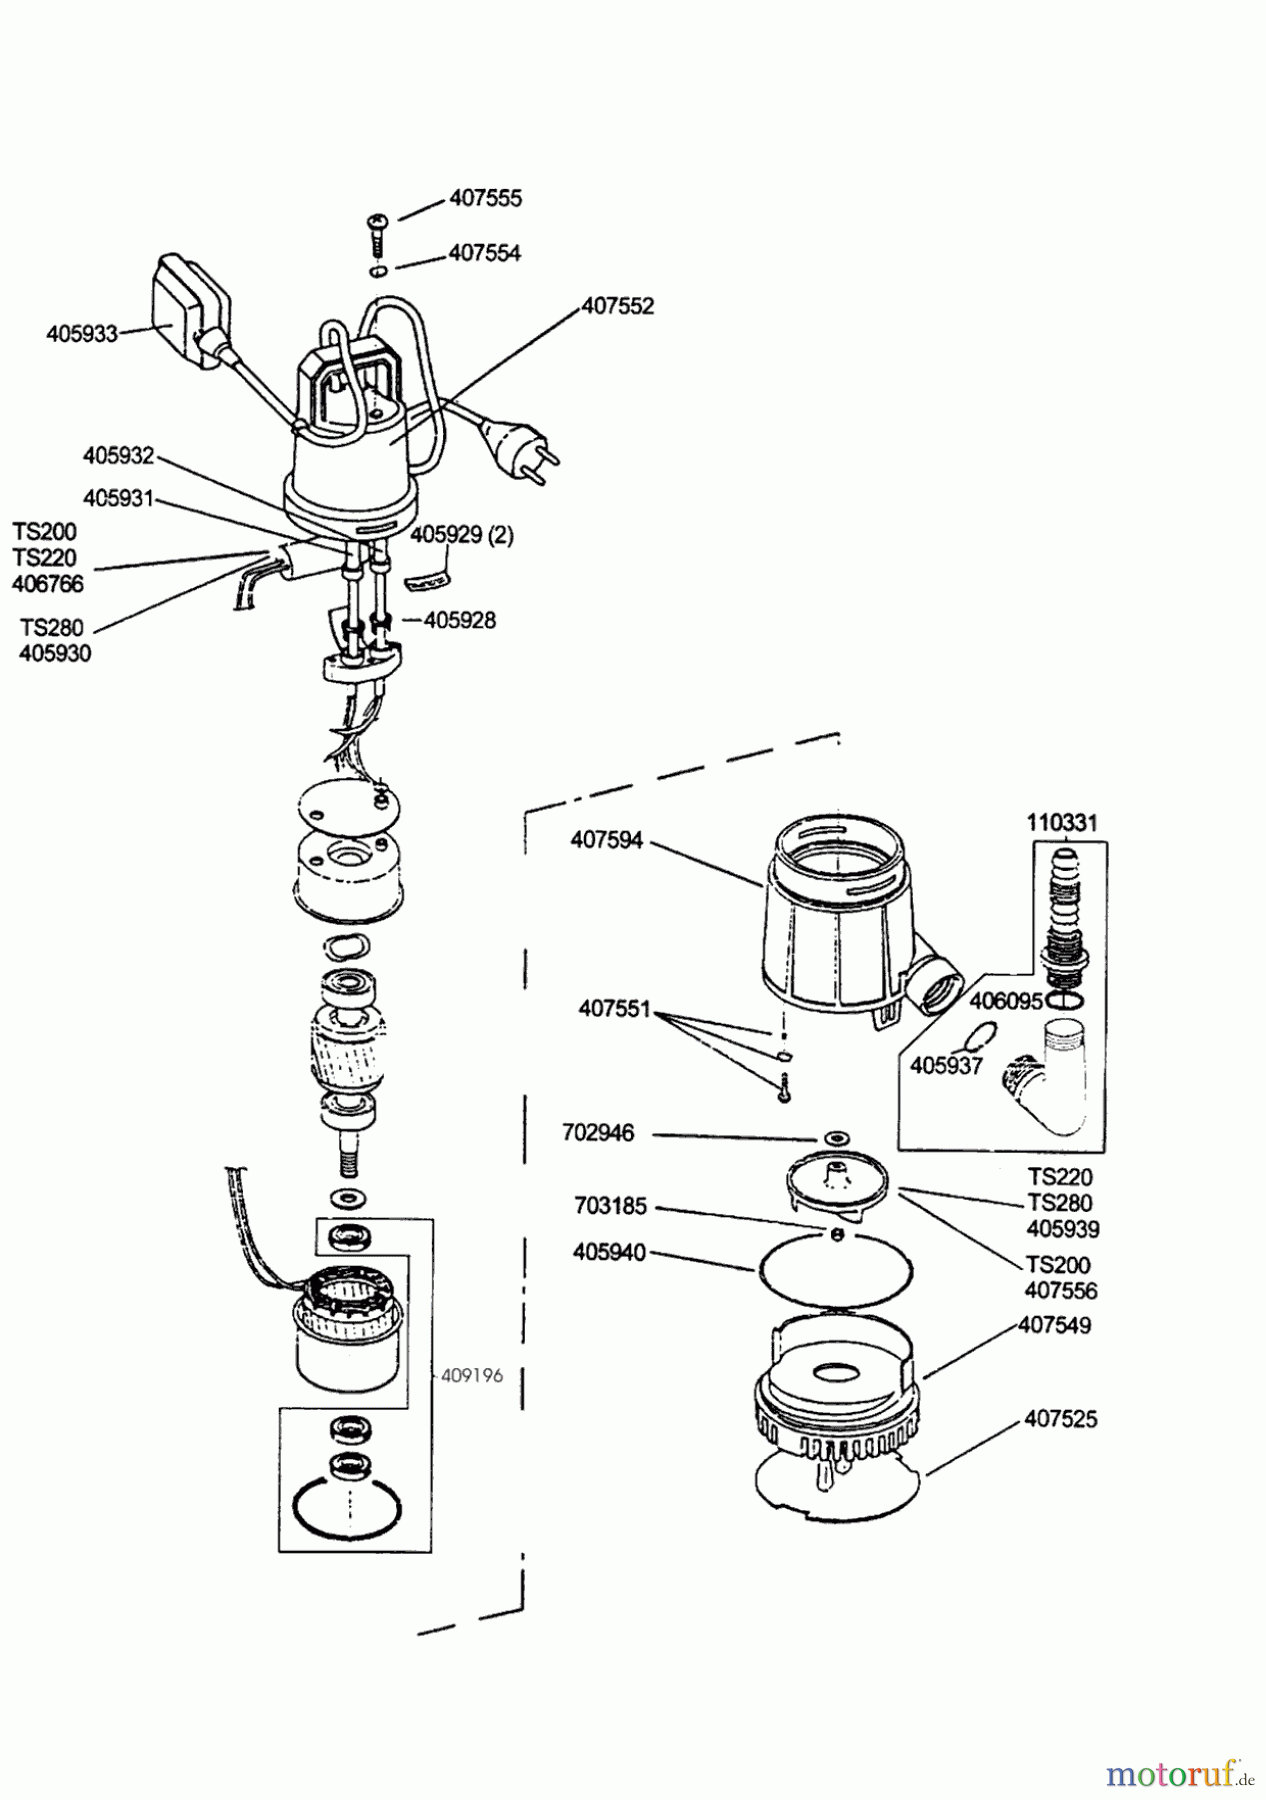  AL-KO Wassertechnik Tauchpumpen TS 220 ab 12/1996 Seite 1